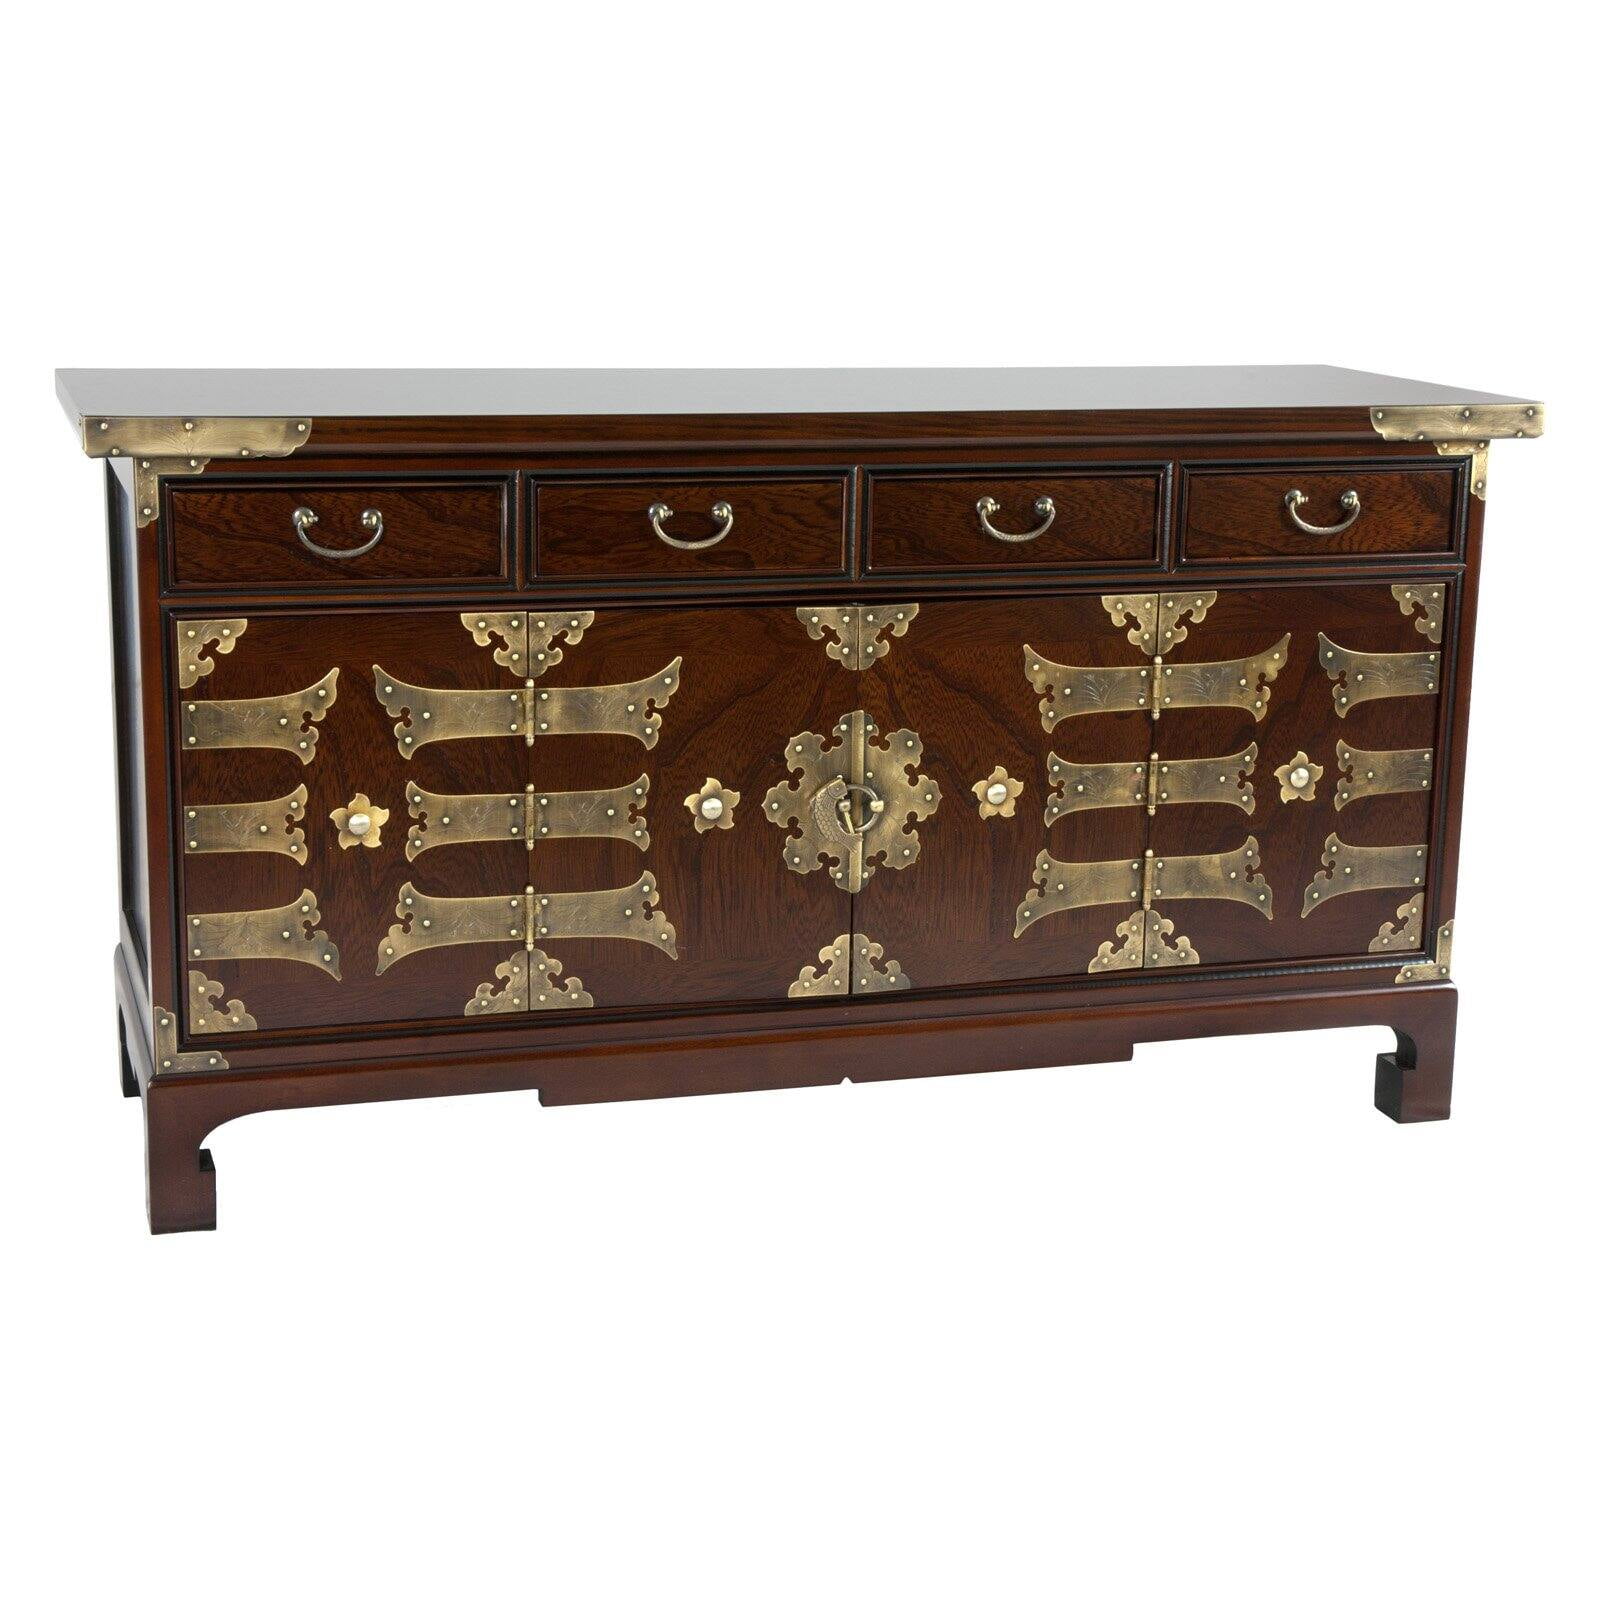 Chinese Chest of Drawers Storage Unit Oriental Antique Style Furniture Dark Wood 